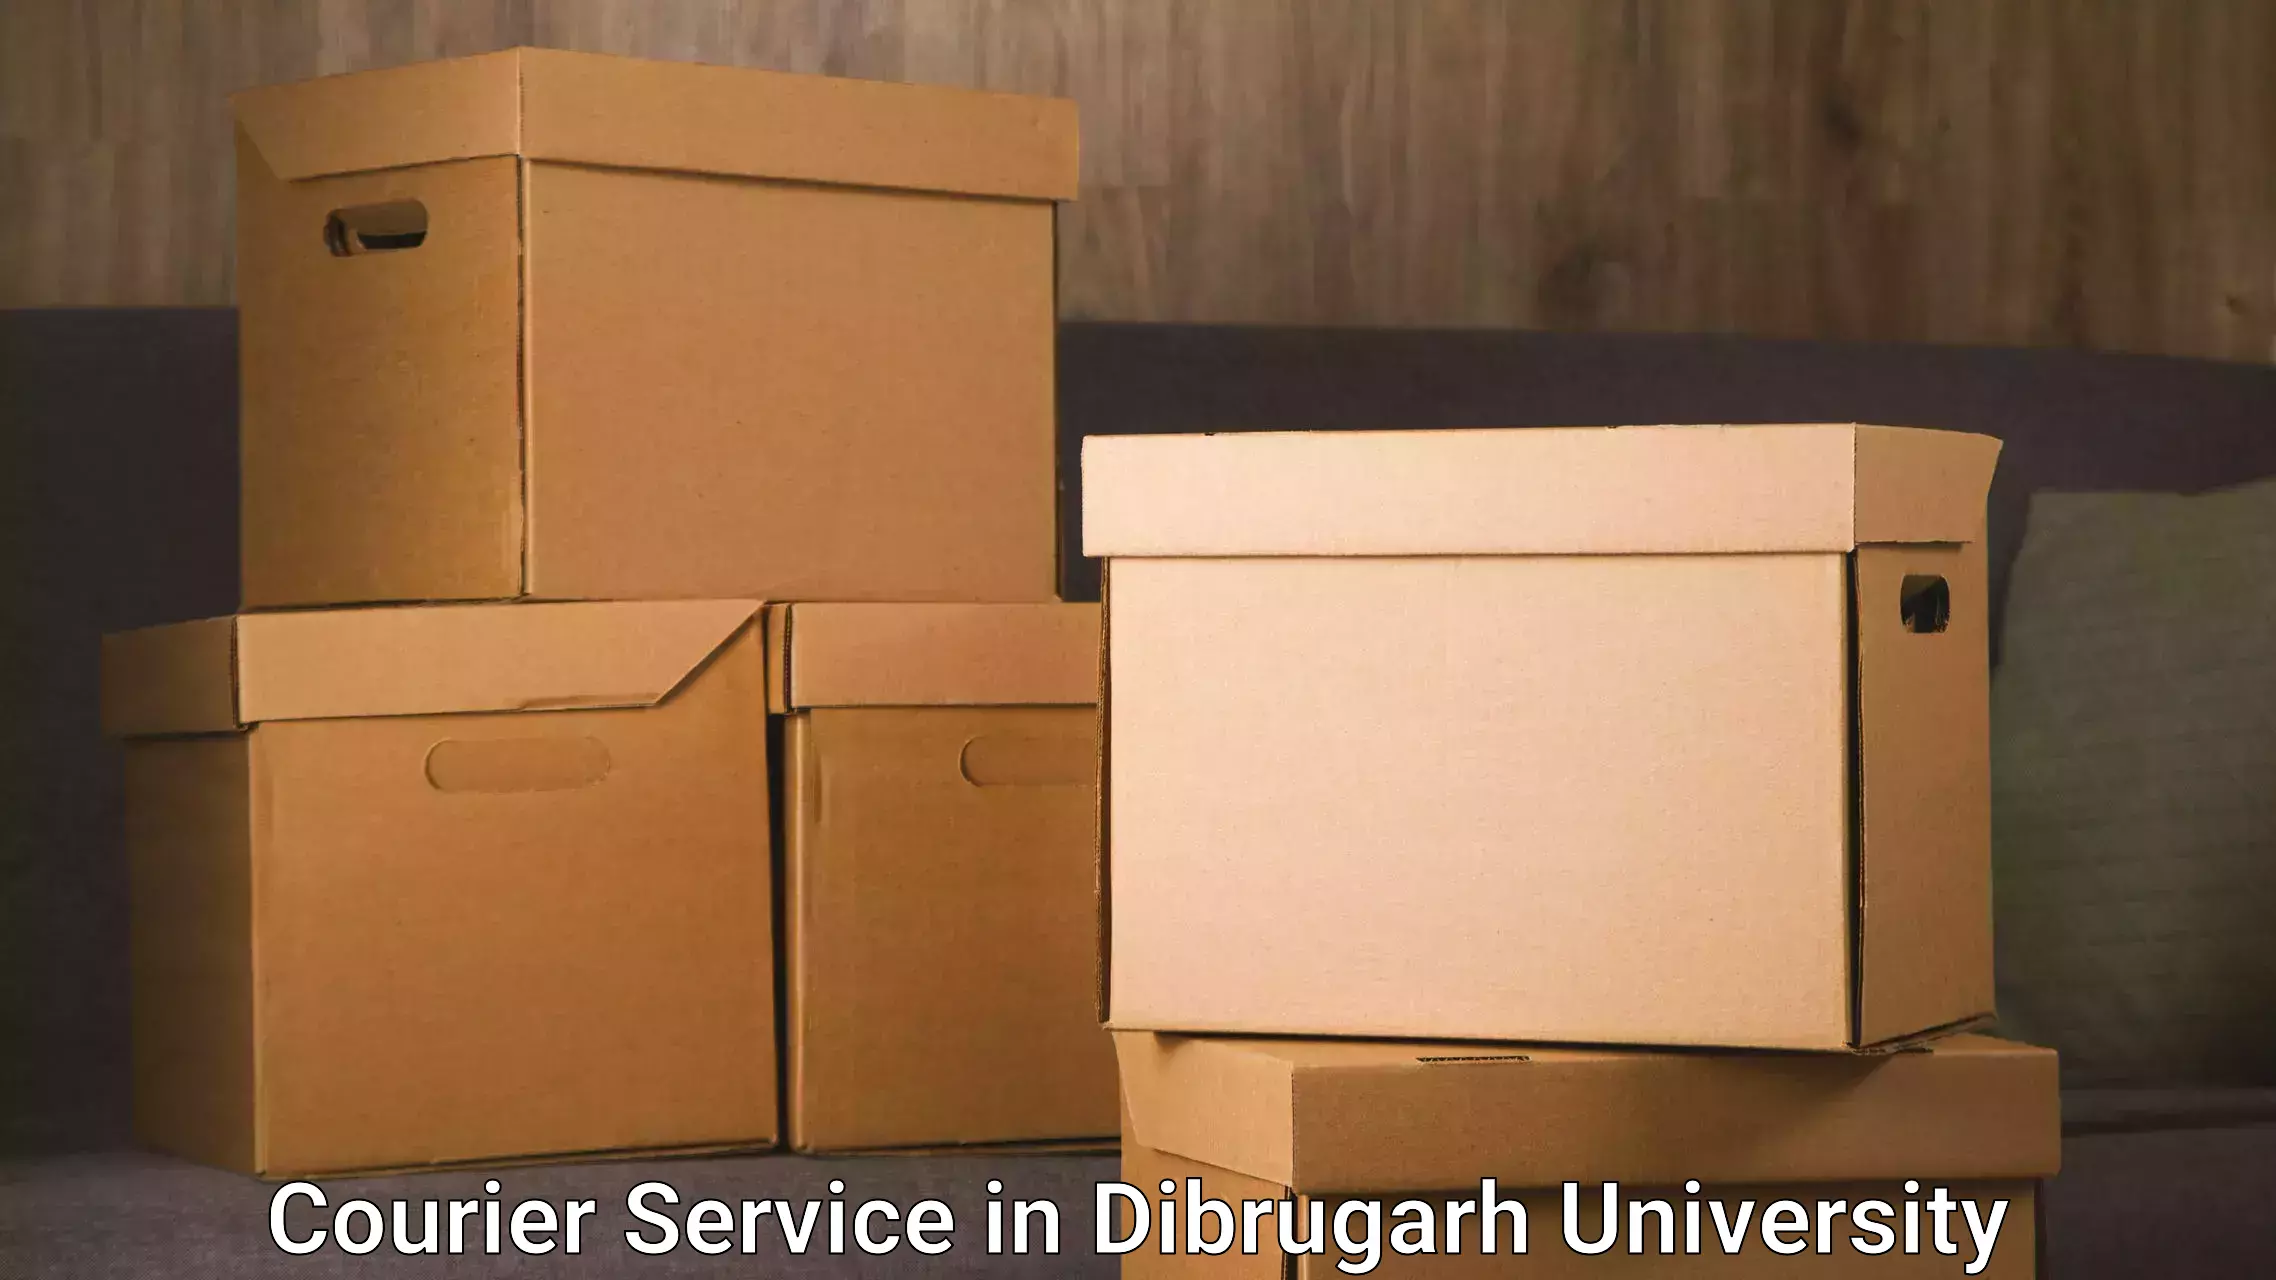 Advanced shipping technology in Dibrugarh University